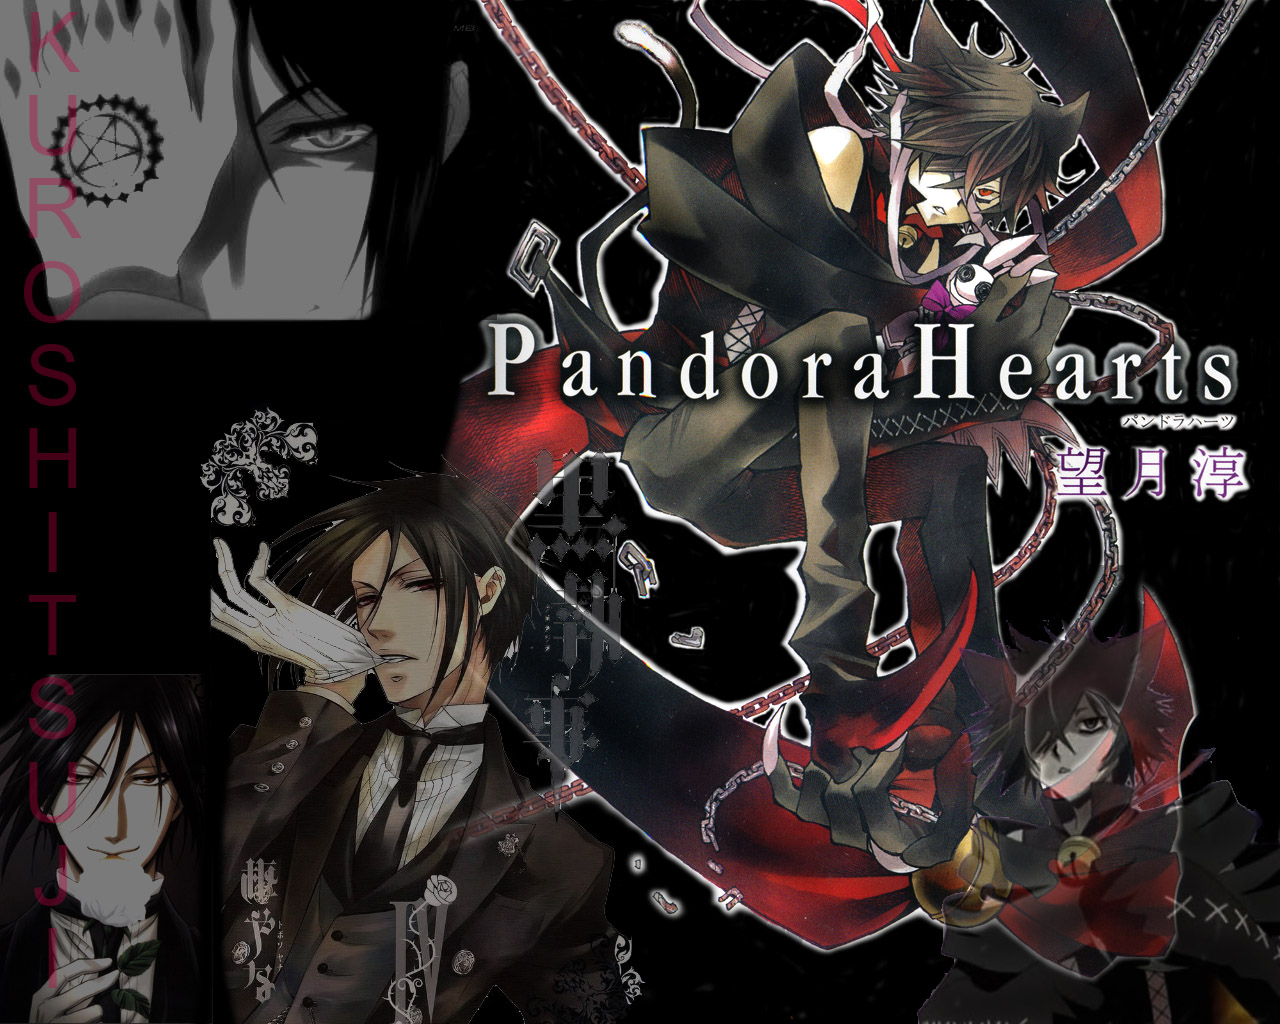 Used The Anime Kuroshitsuji And Pandora Hearts Tto Make A Wallpaper